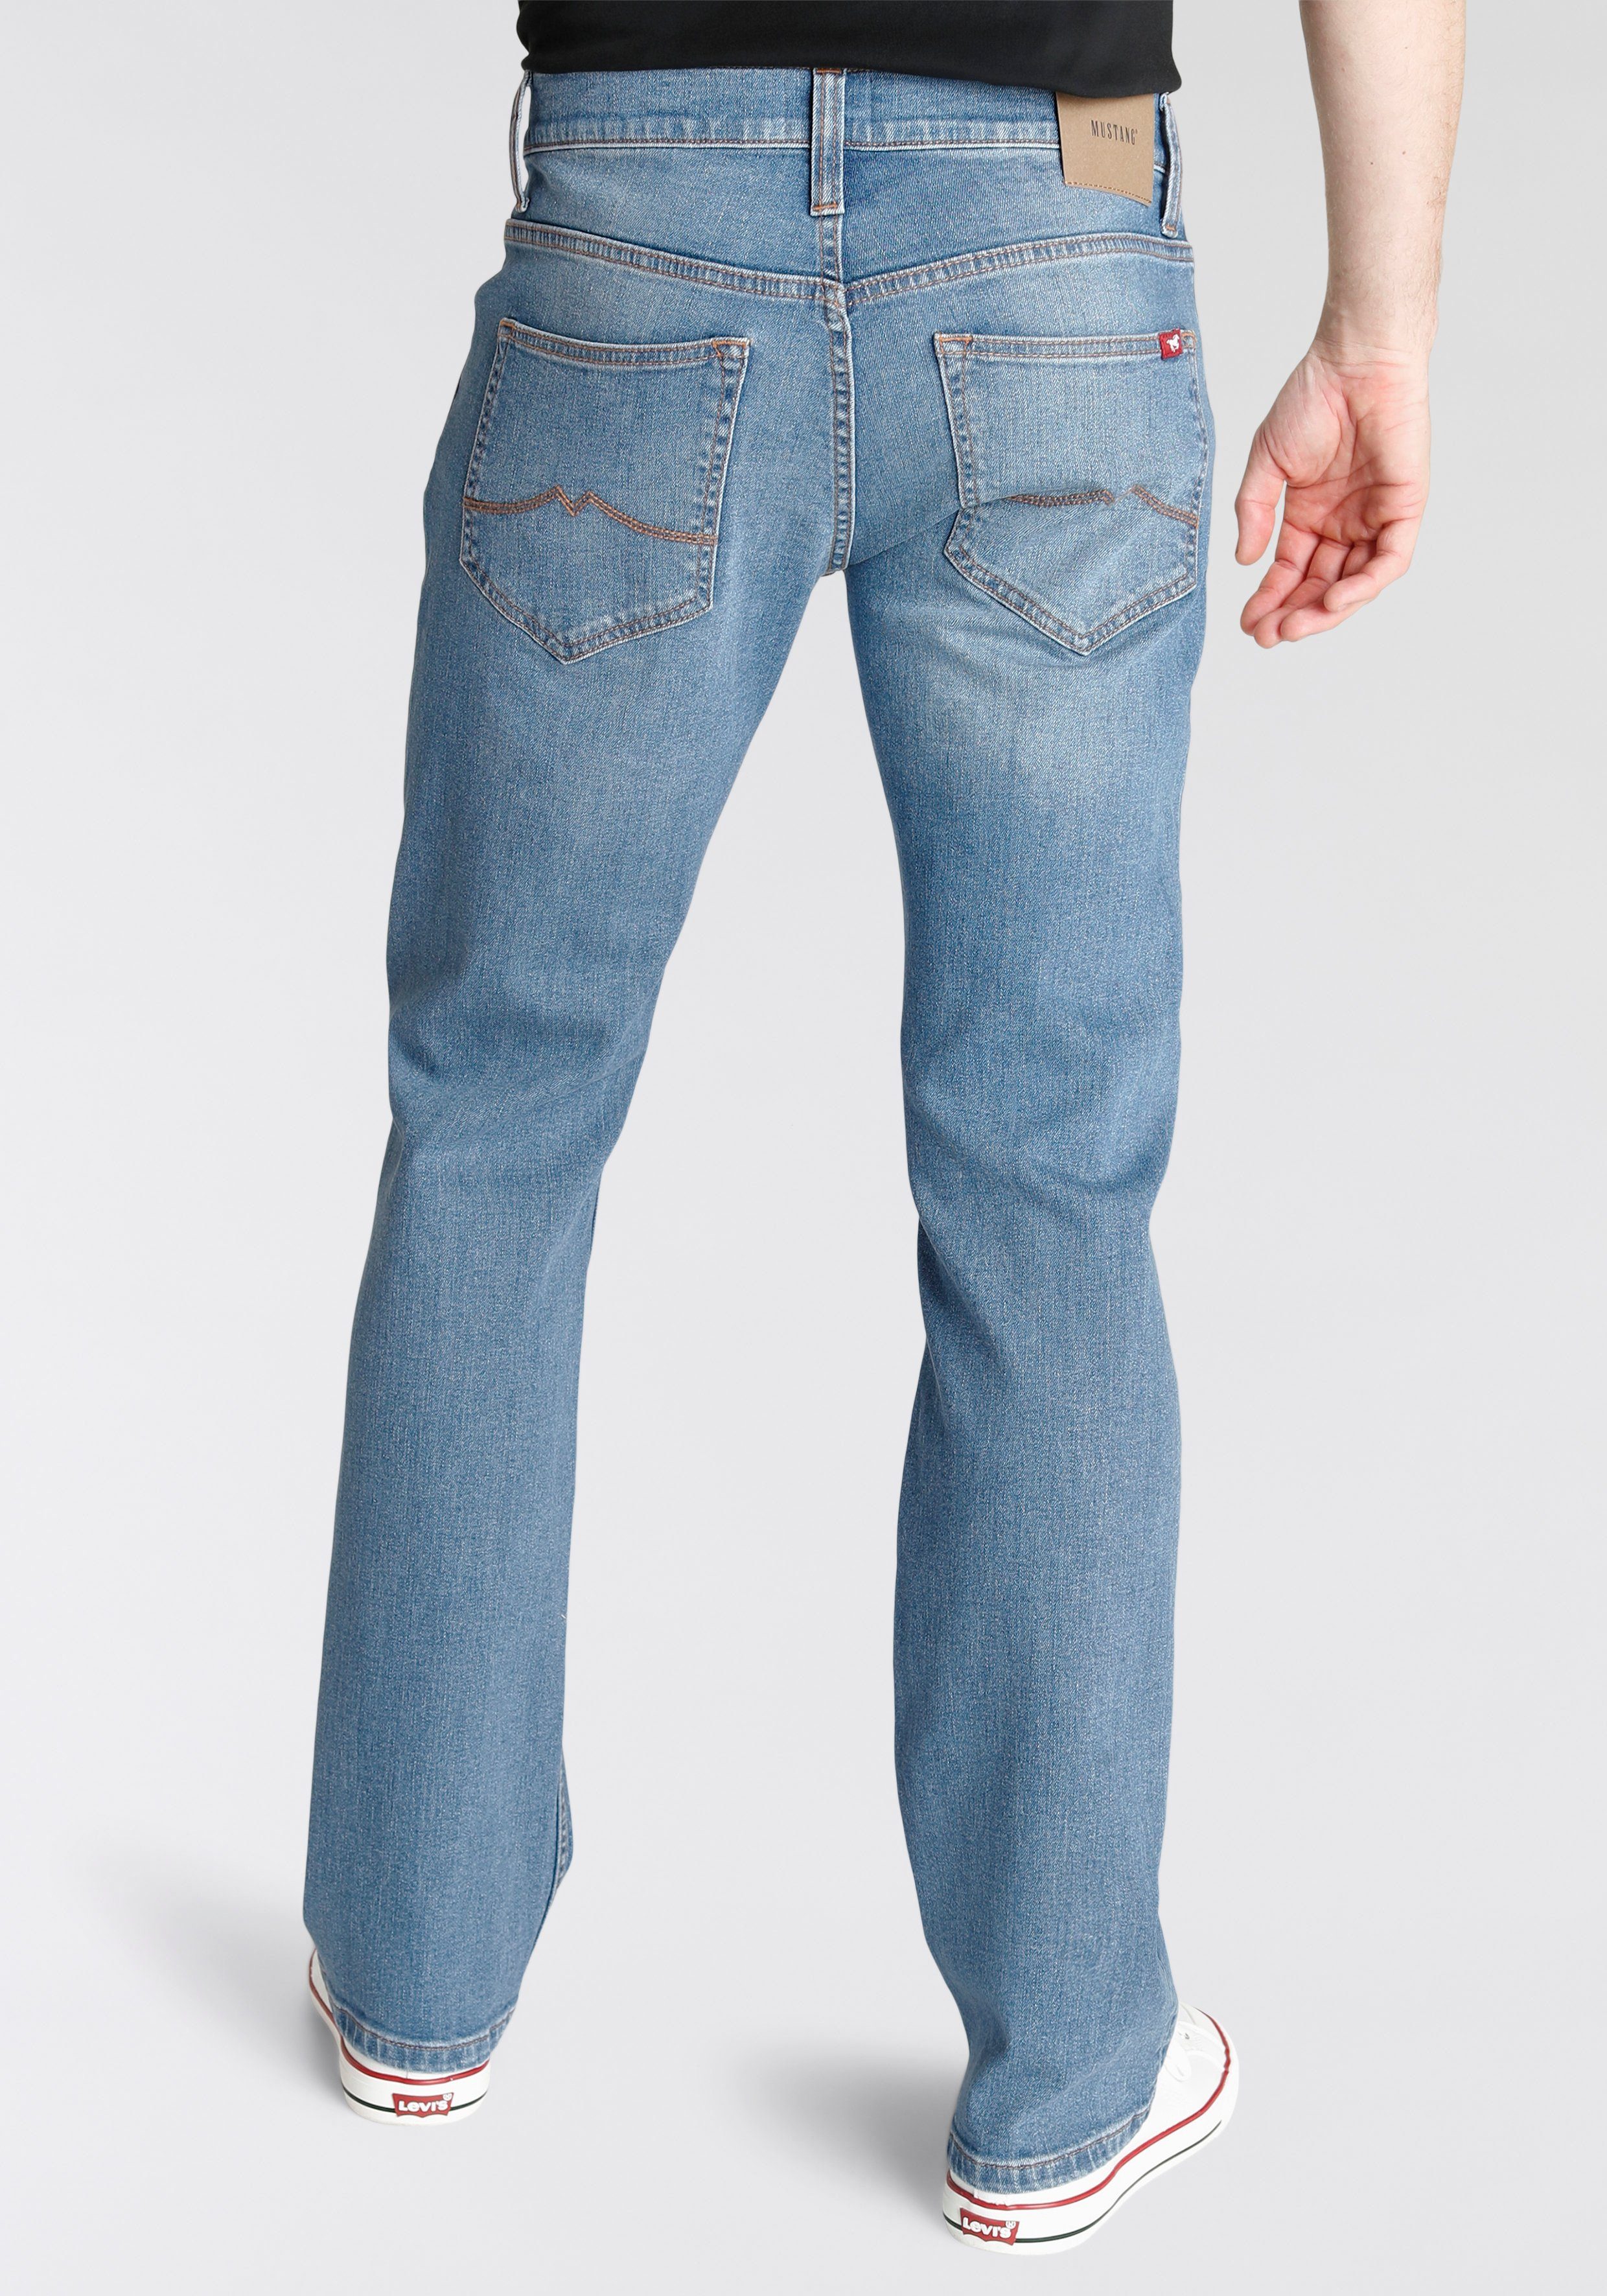 MUSTANG Bootcut-Jeans STYLE OREGON BOOTCUT medium blue